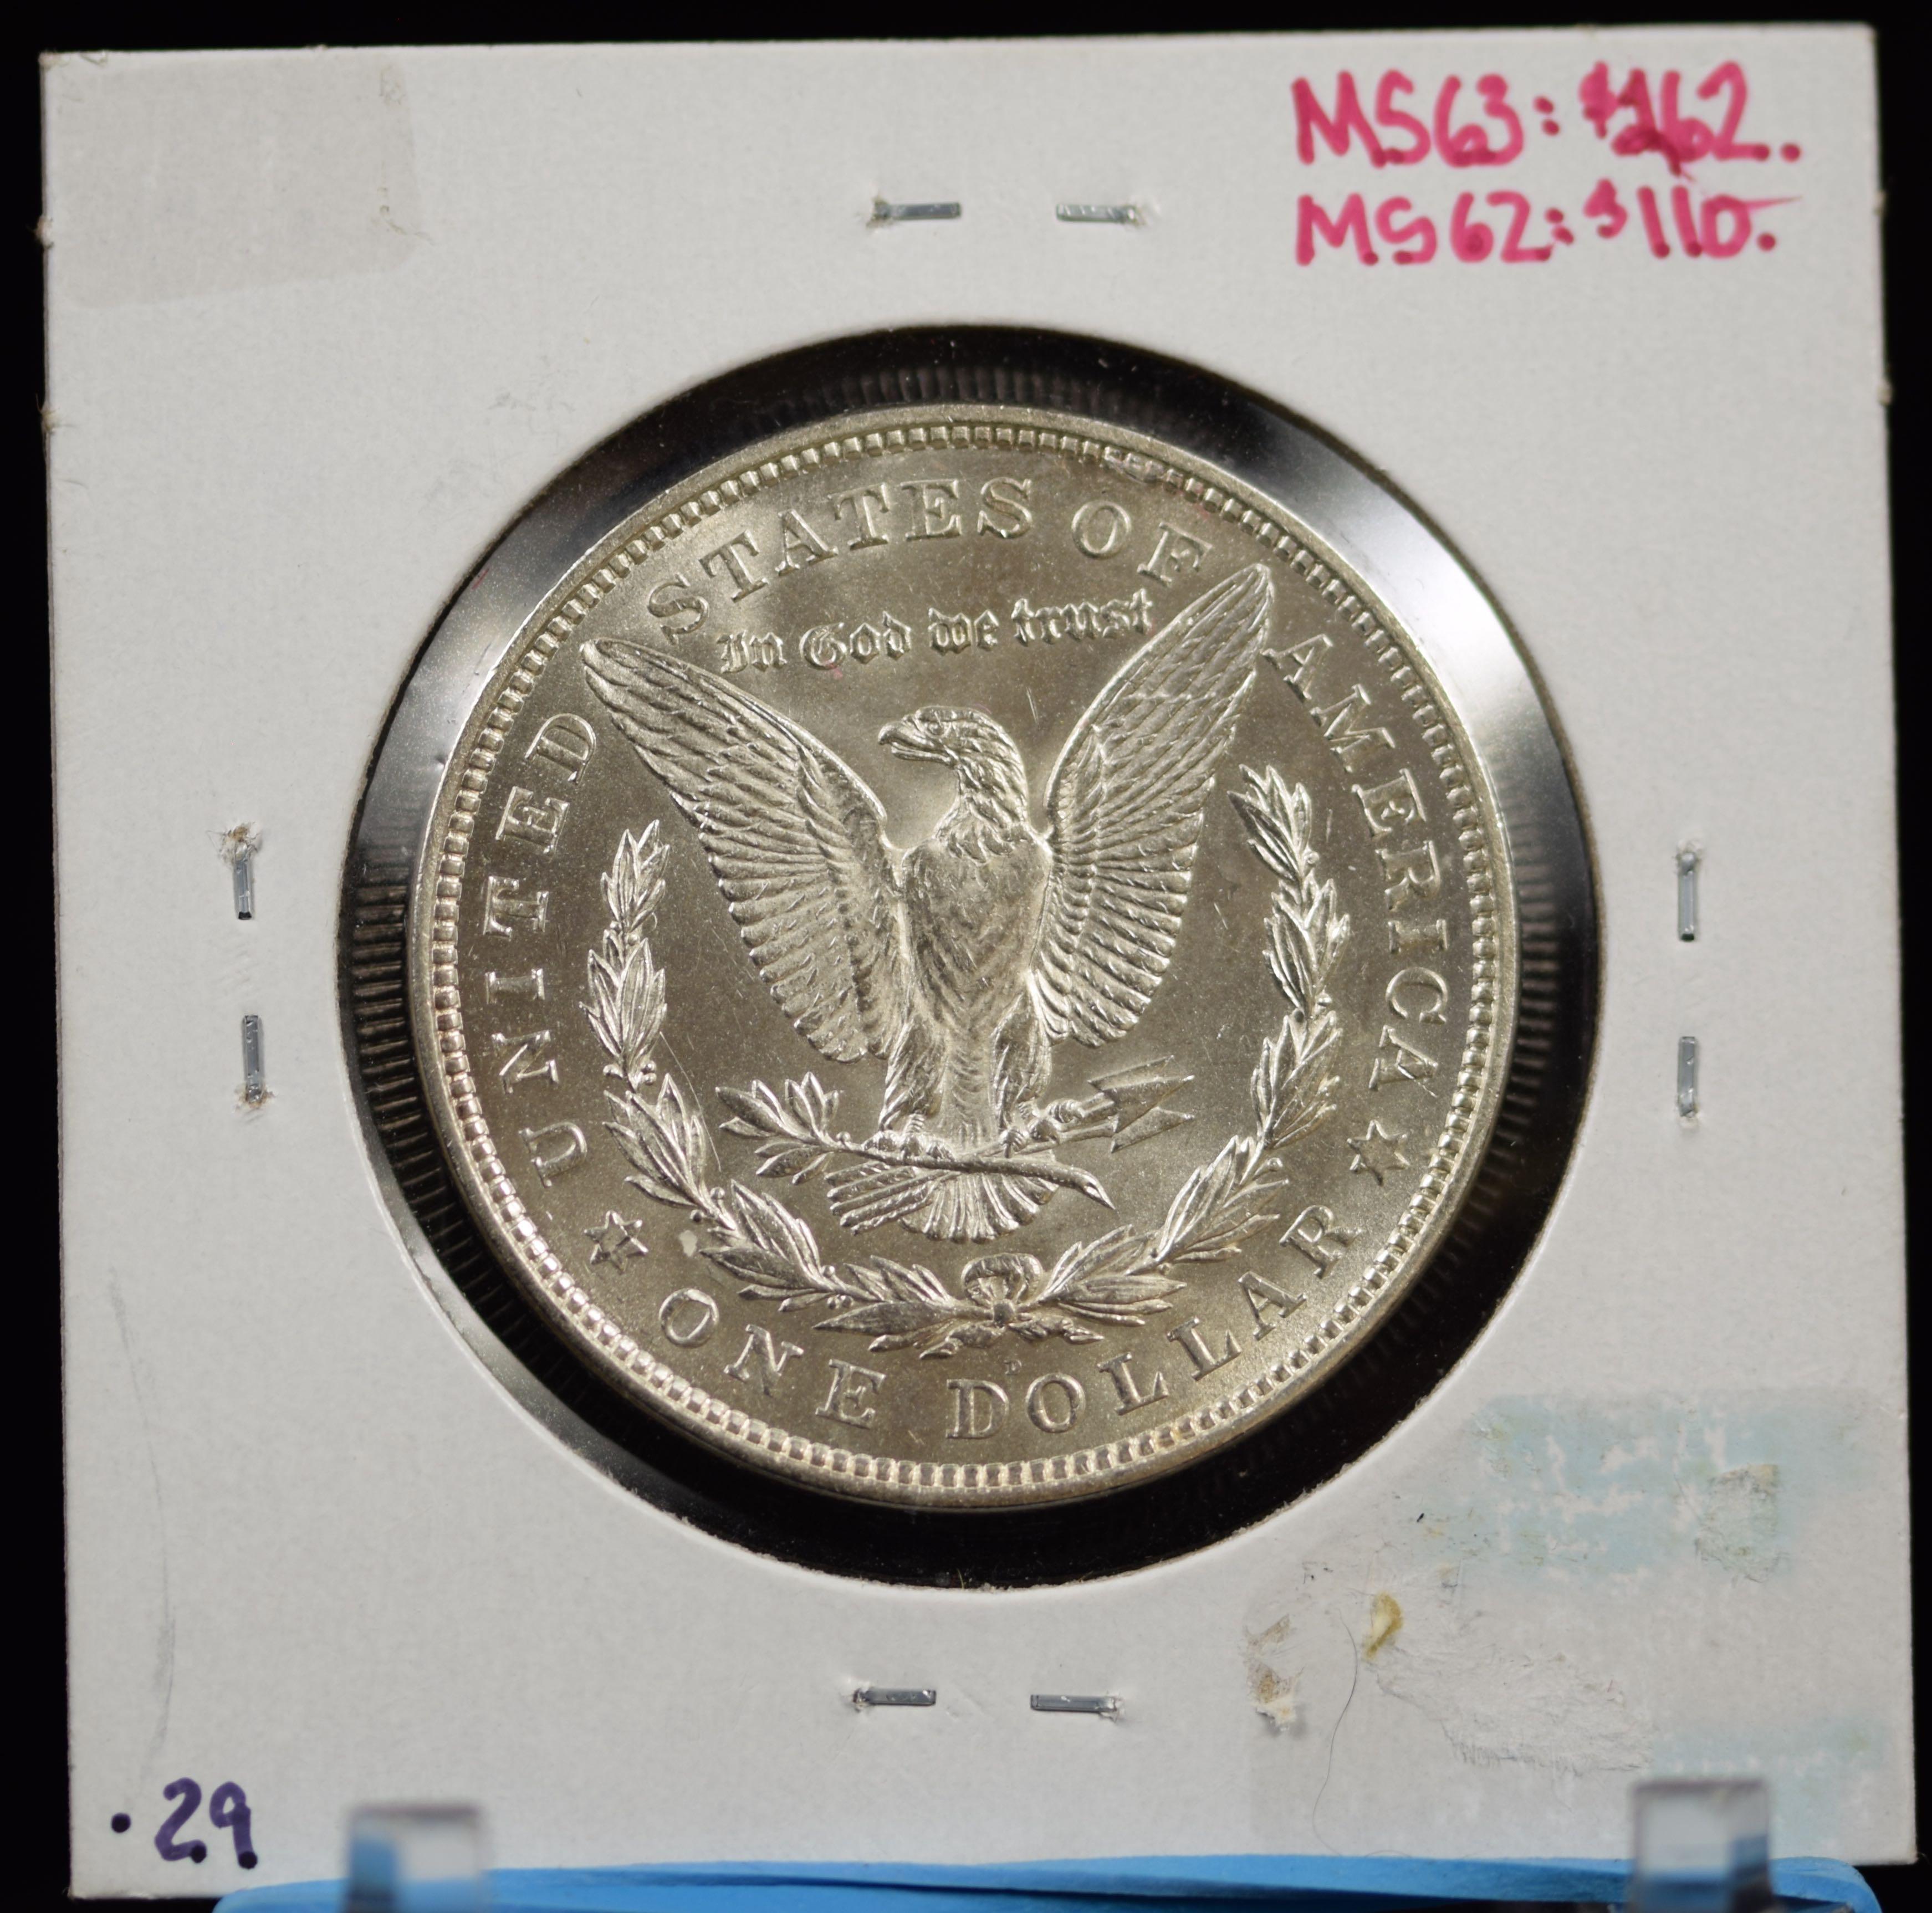 1921-D Morgan Dollar VAM1 GEM BU